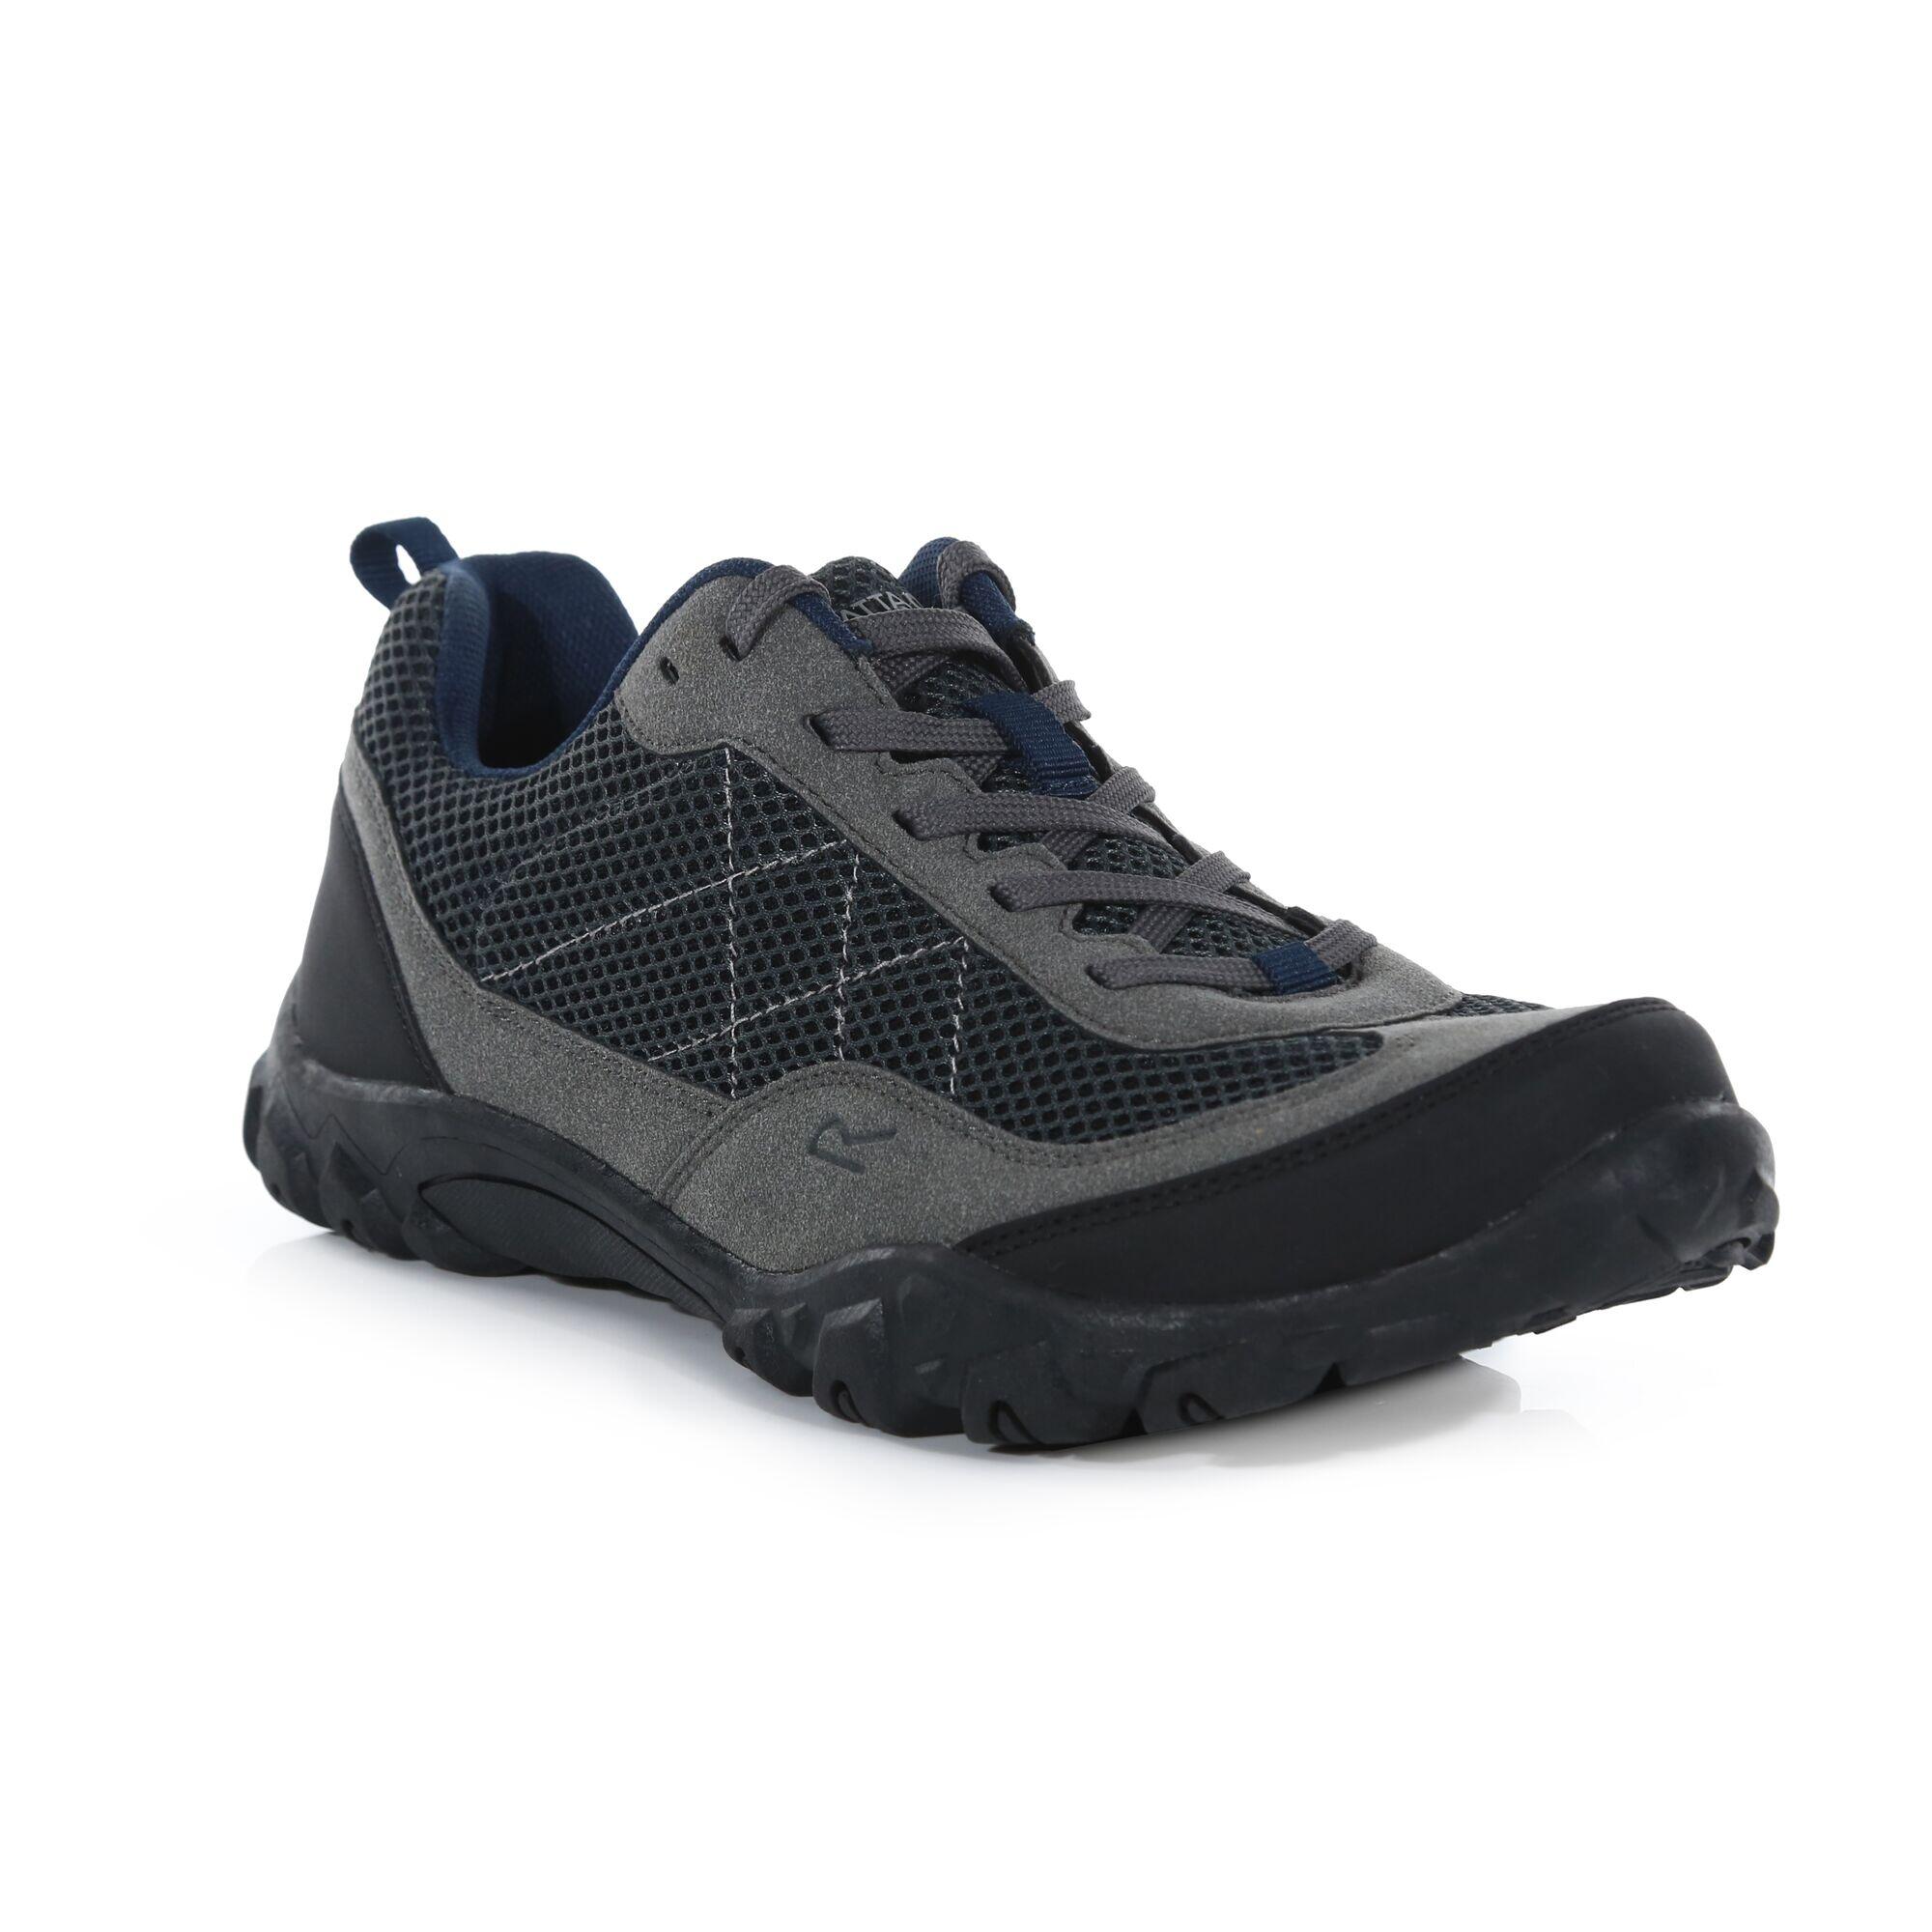 Edgepoint Life Men's Walking Shoes - Granite Grey 2/6